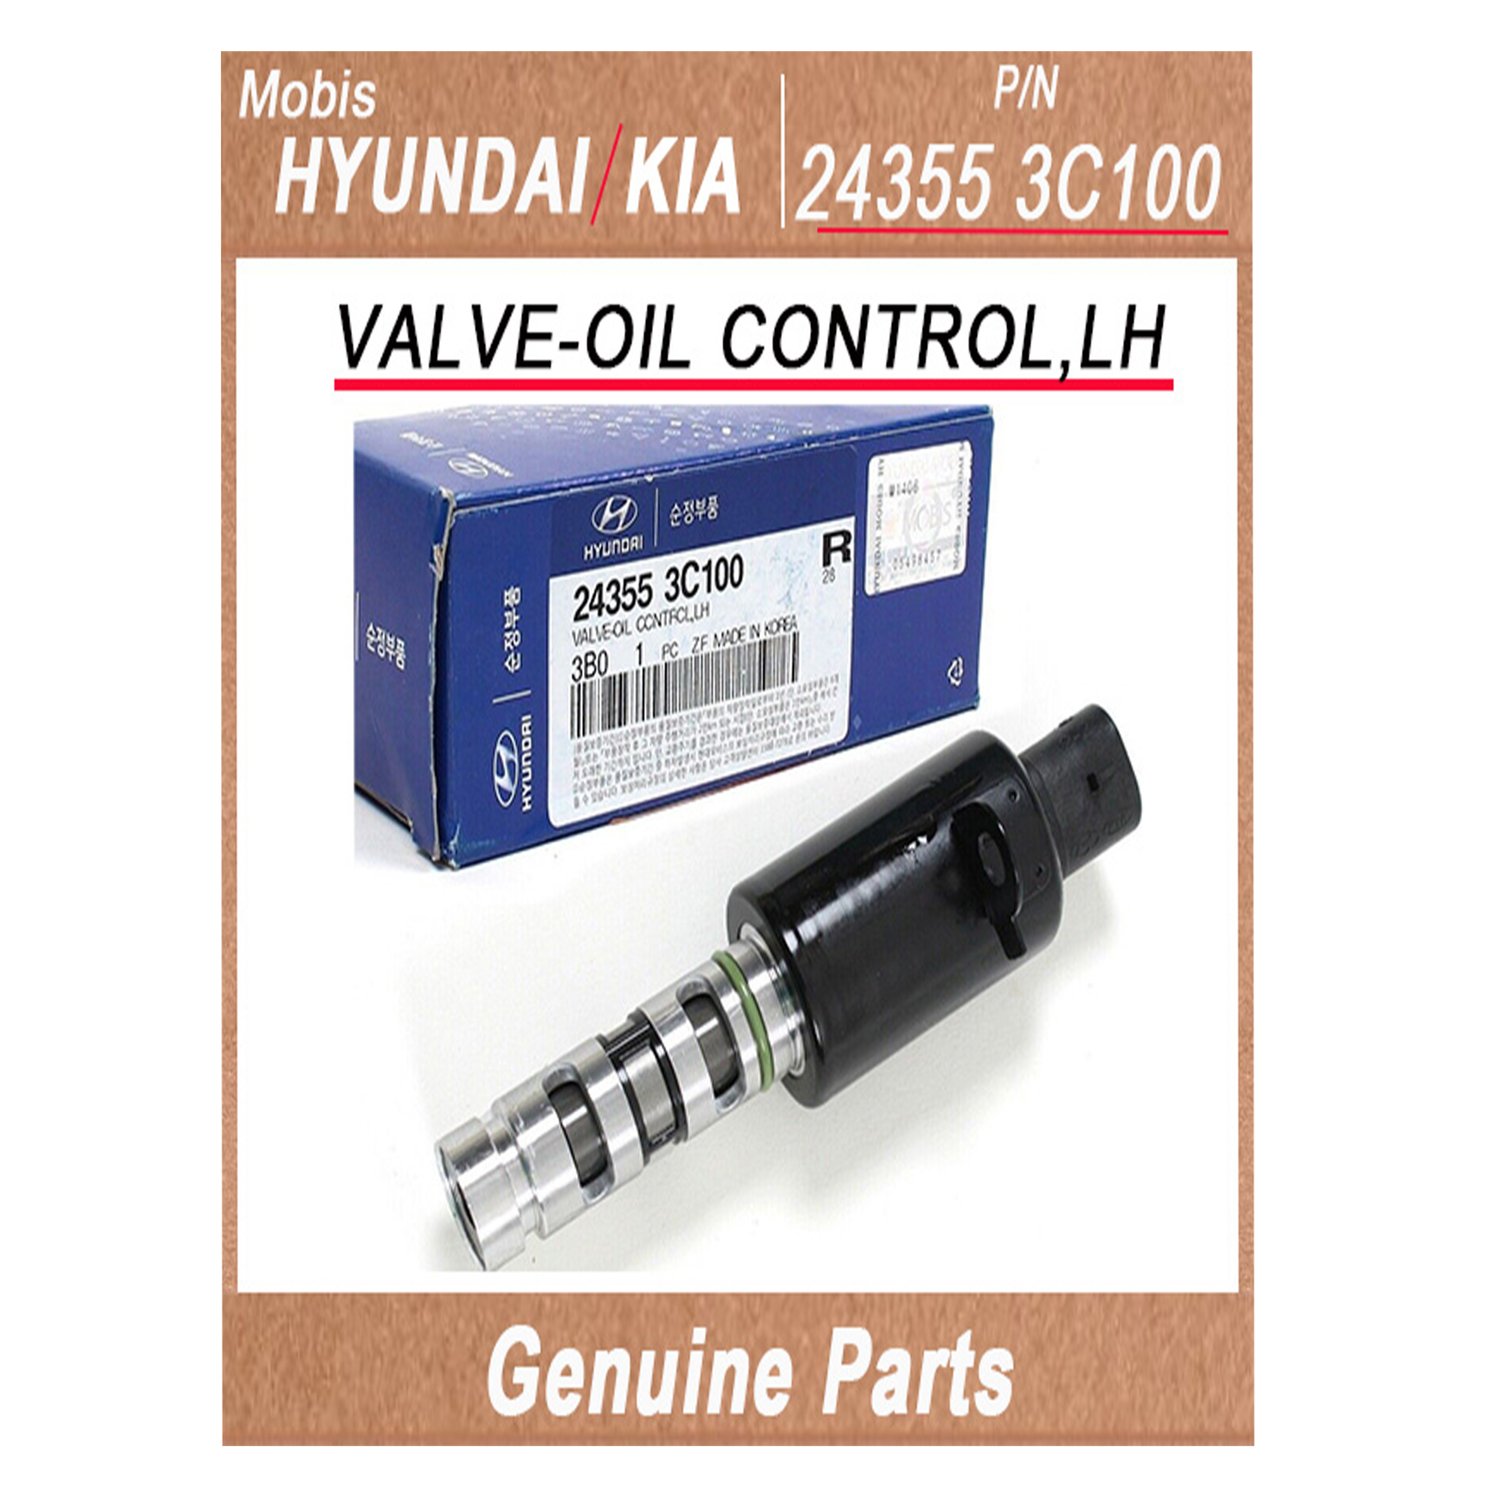 24355 3c100243553C100 _ VALVE_OIL CONTROL_LH _ Genuine Korean Automotive Spare Parts _ Hyundai Kia _